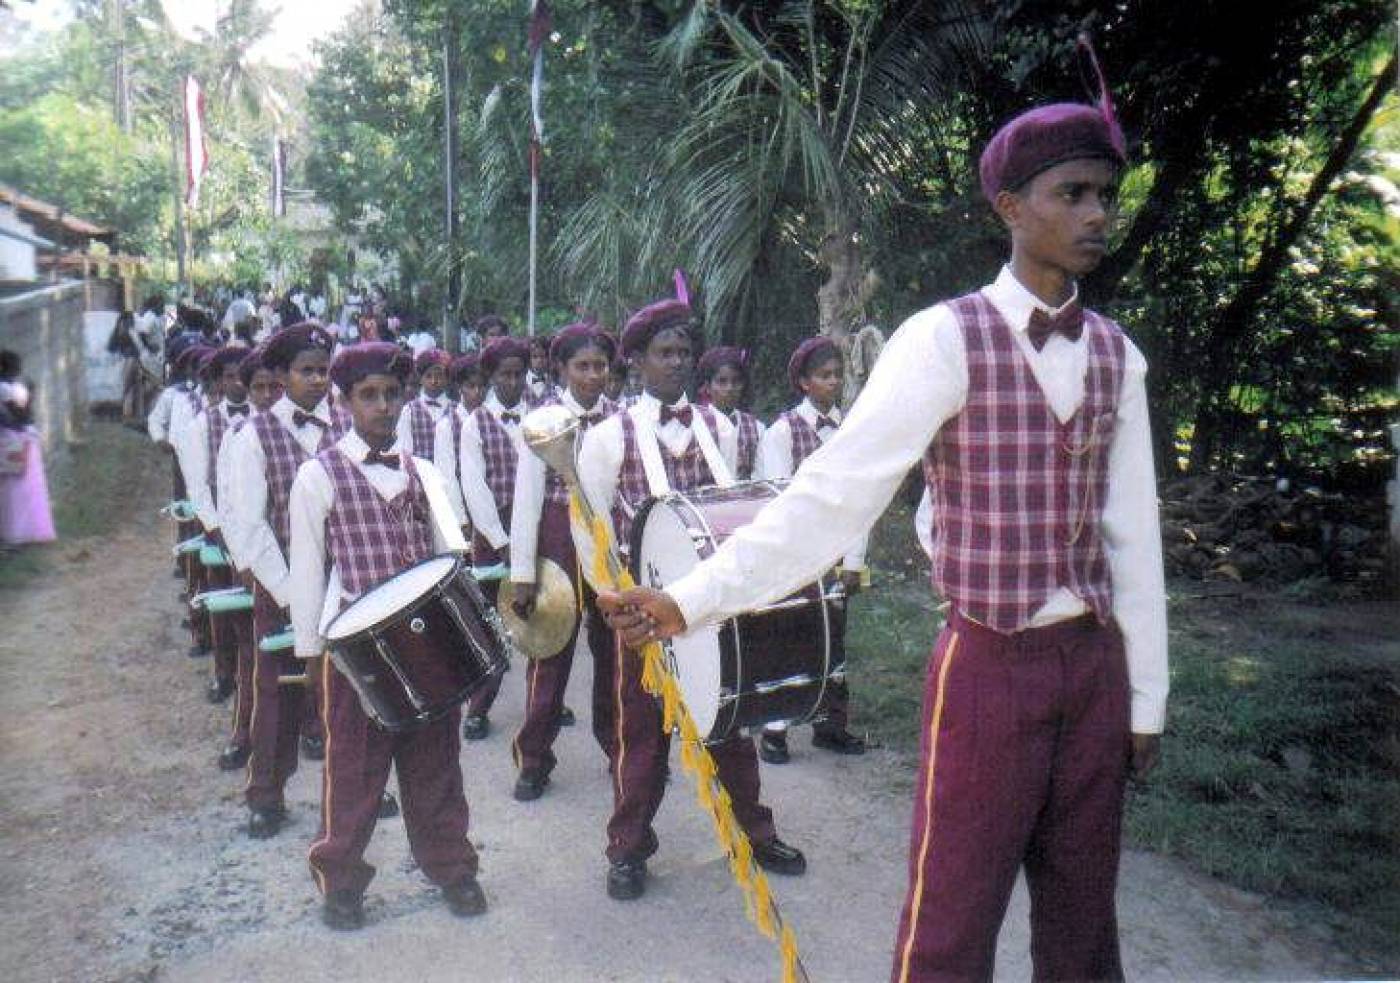 School band